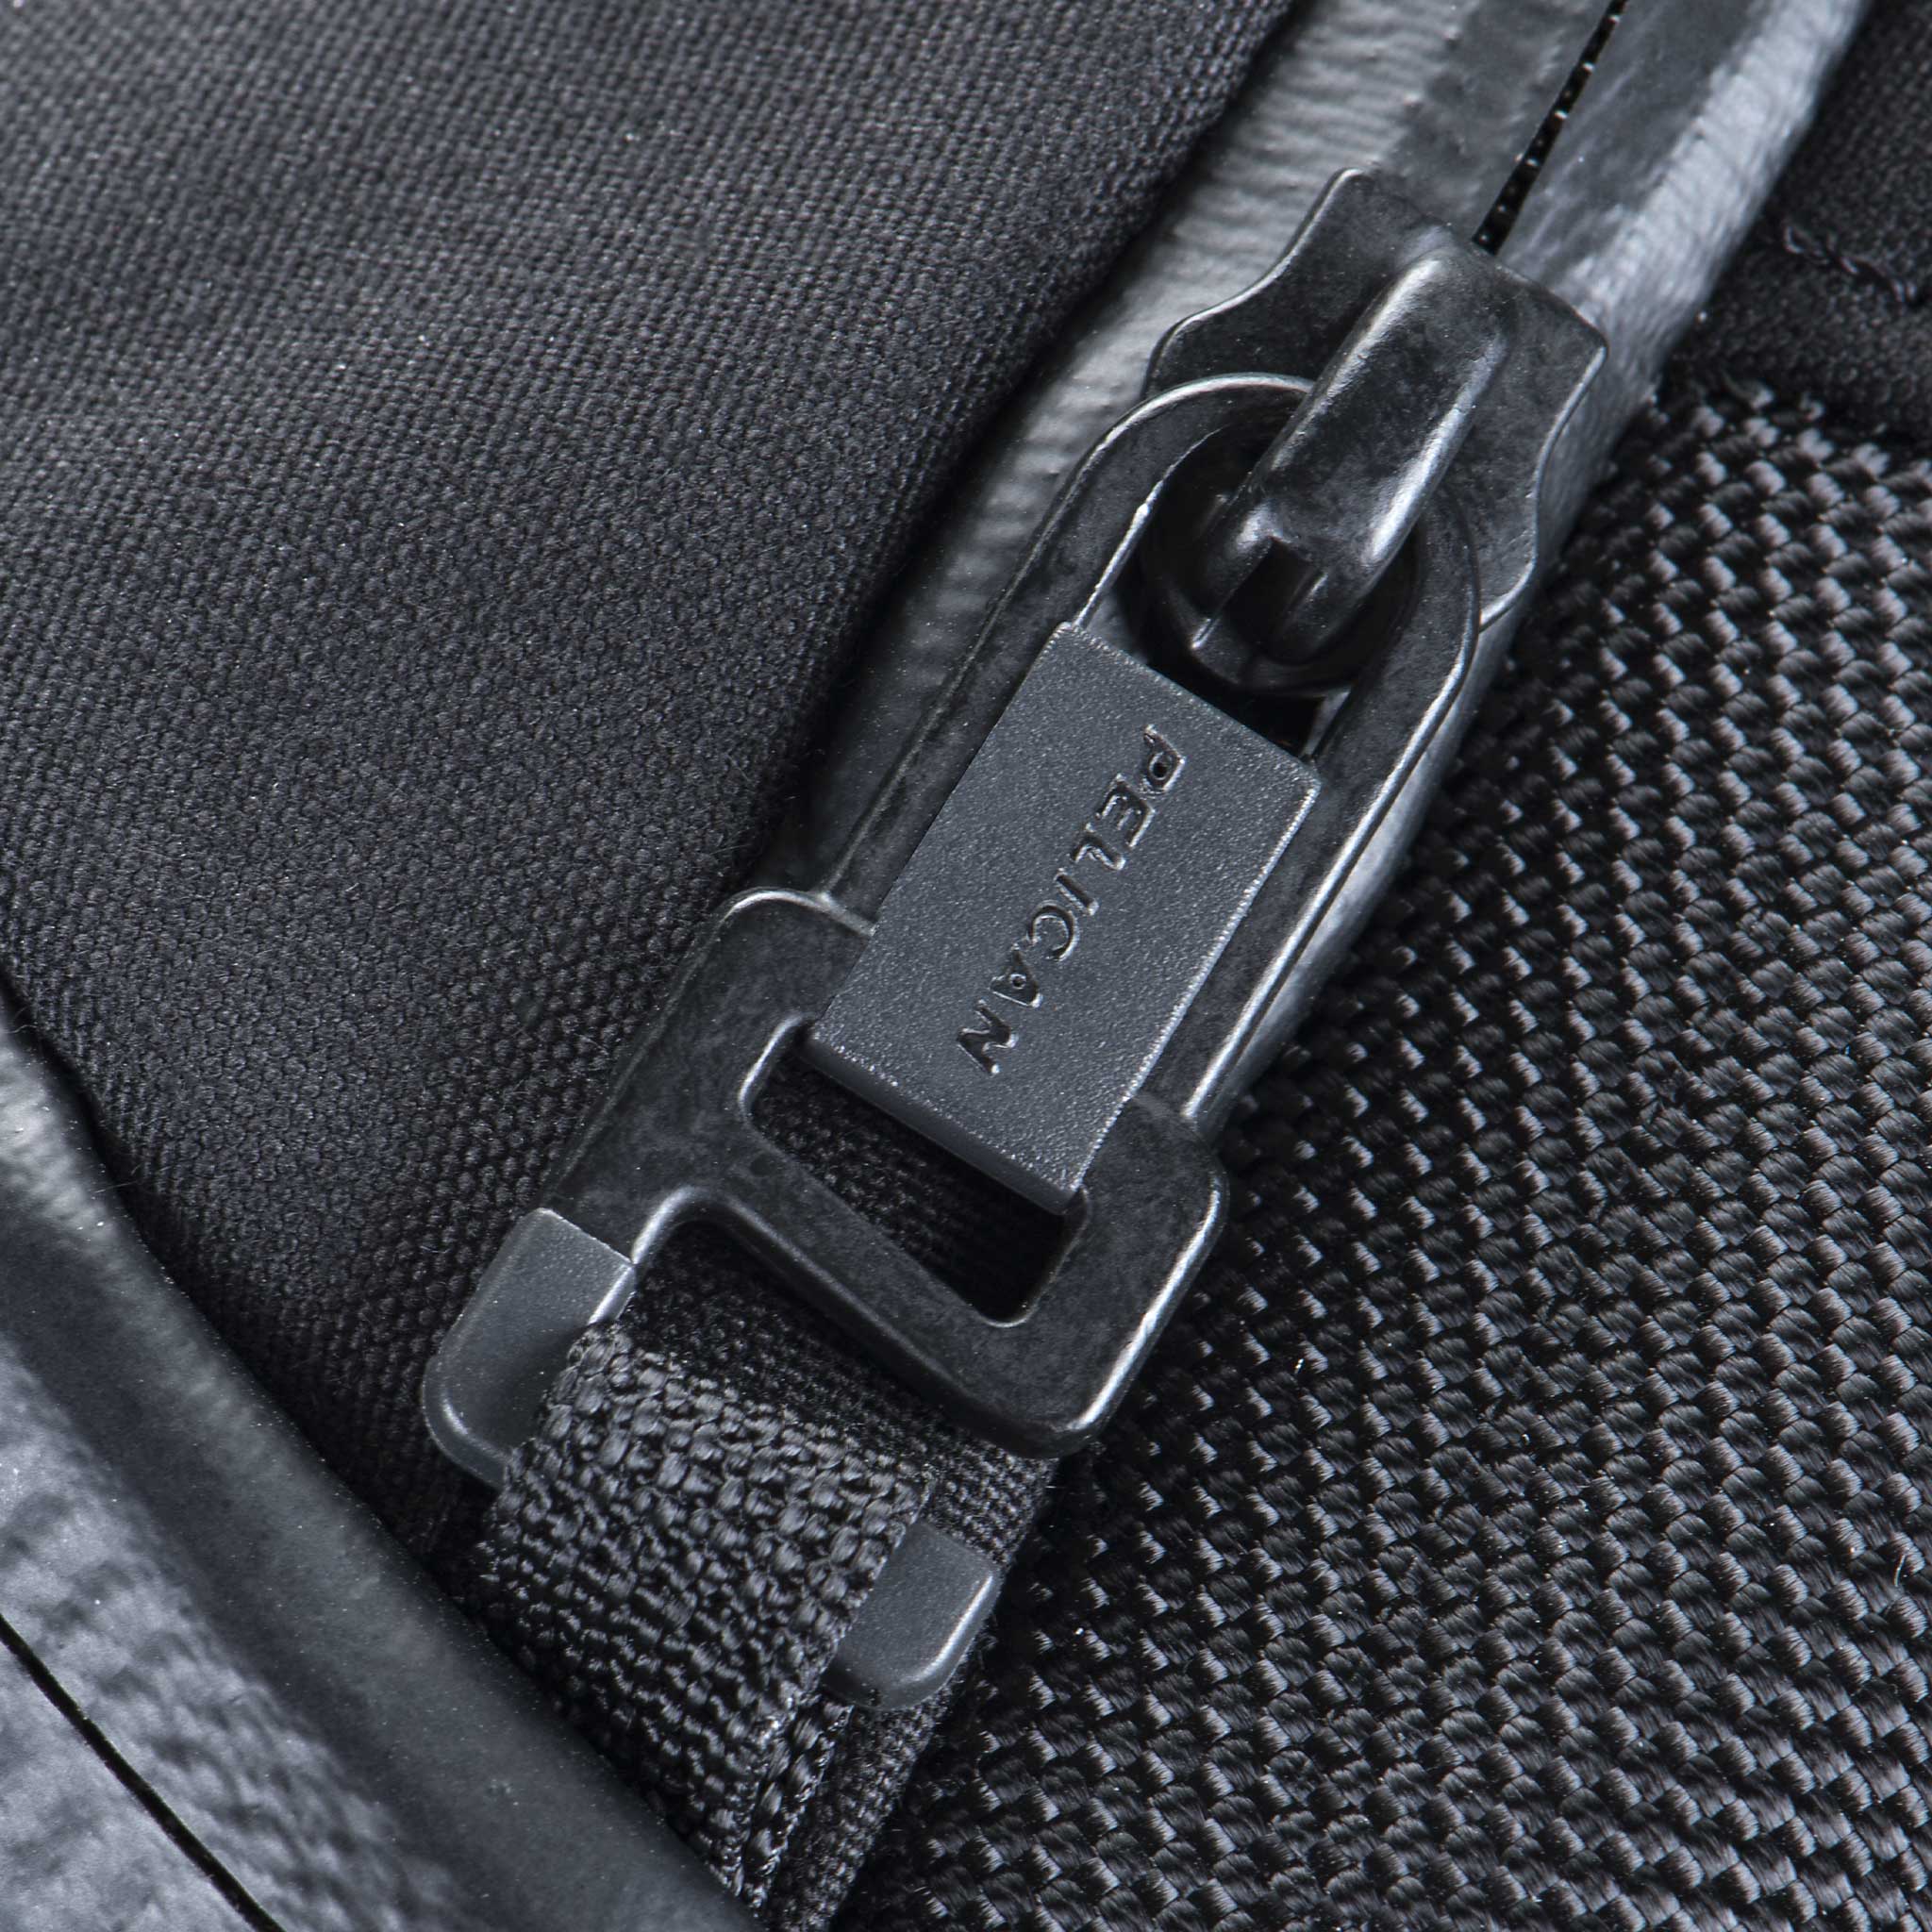 Pelican™ MPB35 Mobile Protect Backpack - Shop Pelican Coolers